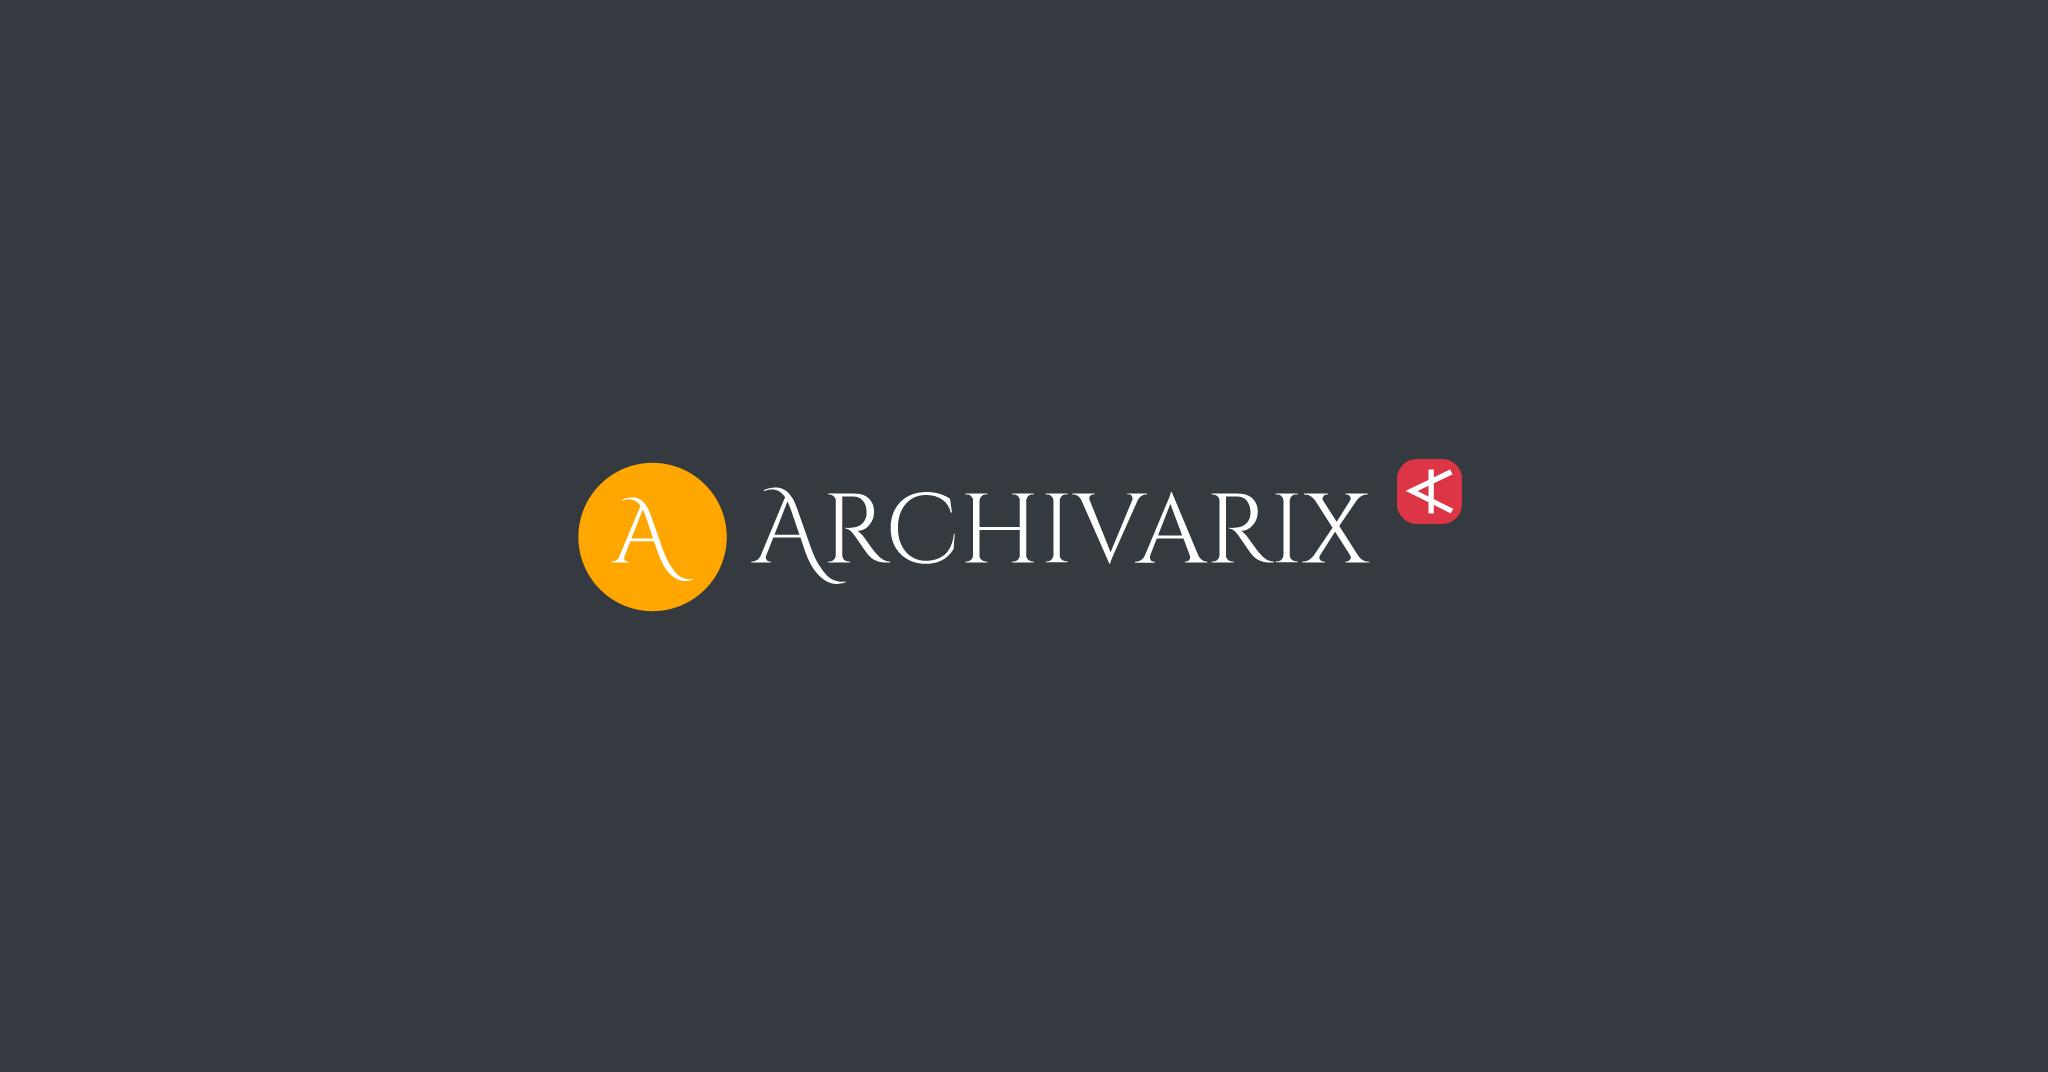 web archive extractor online